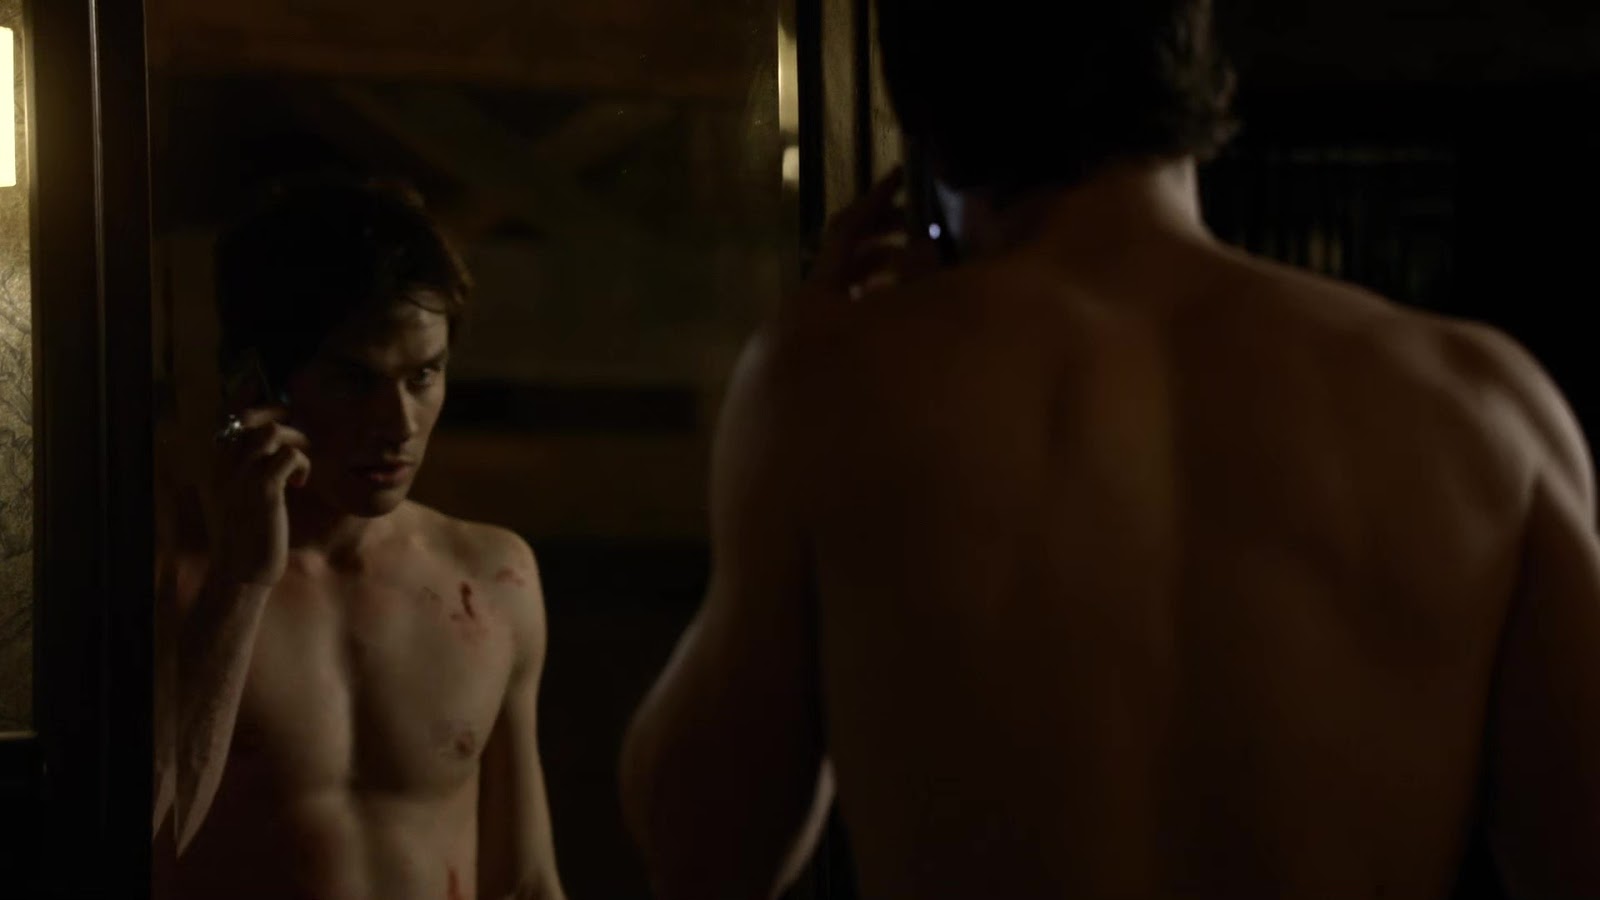 Ian Somerhalder shirtless in The Vampire Diaries 1-10 "The Turning Poi...